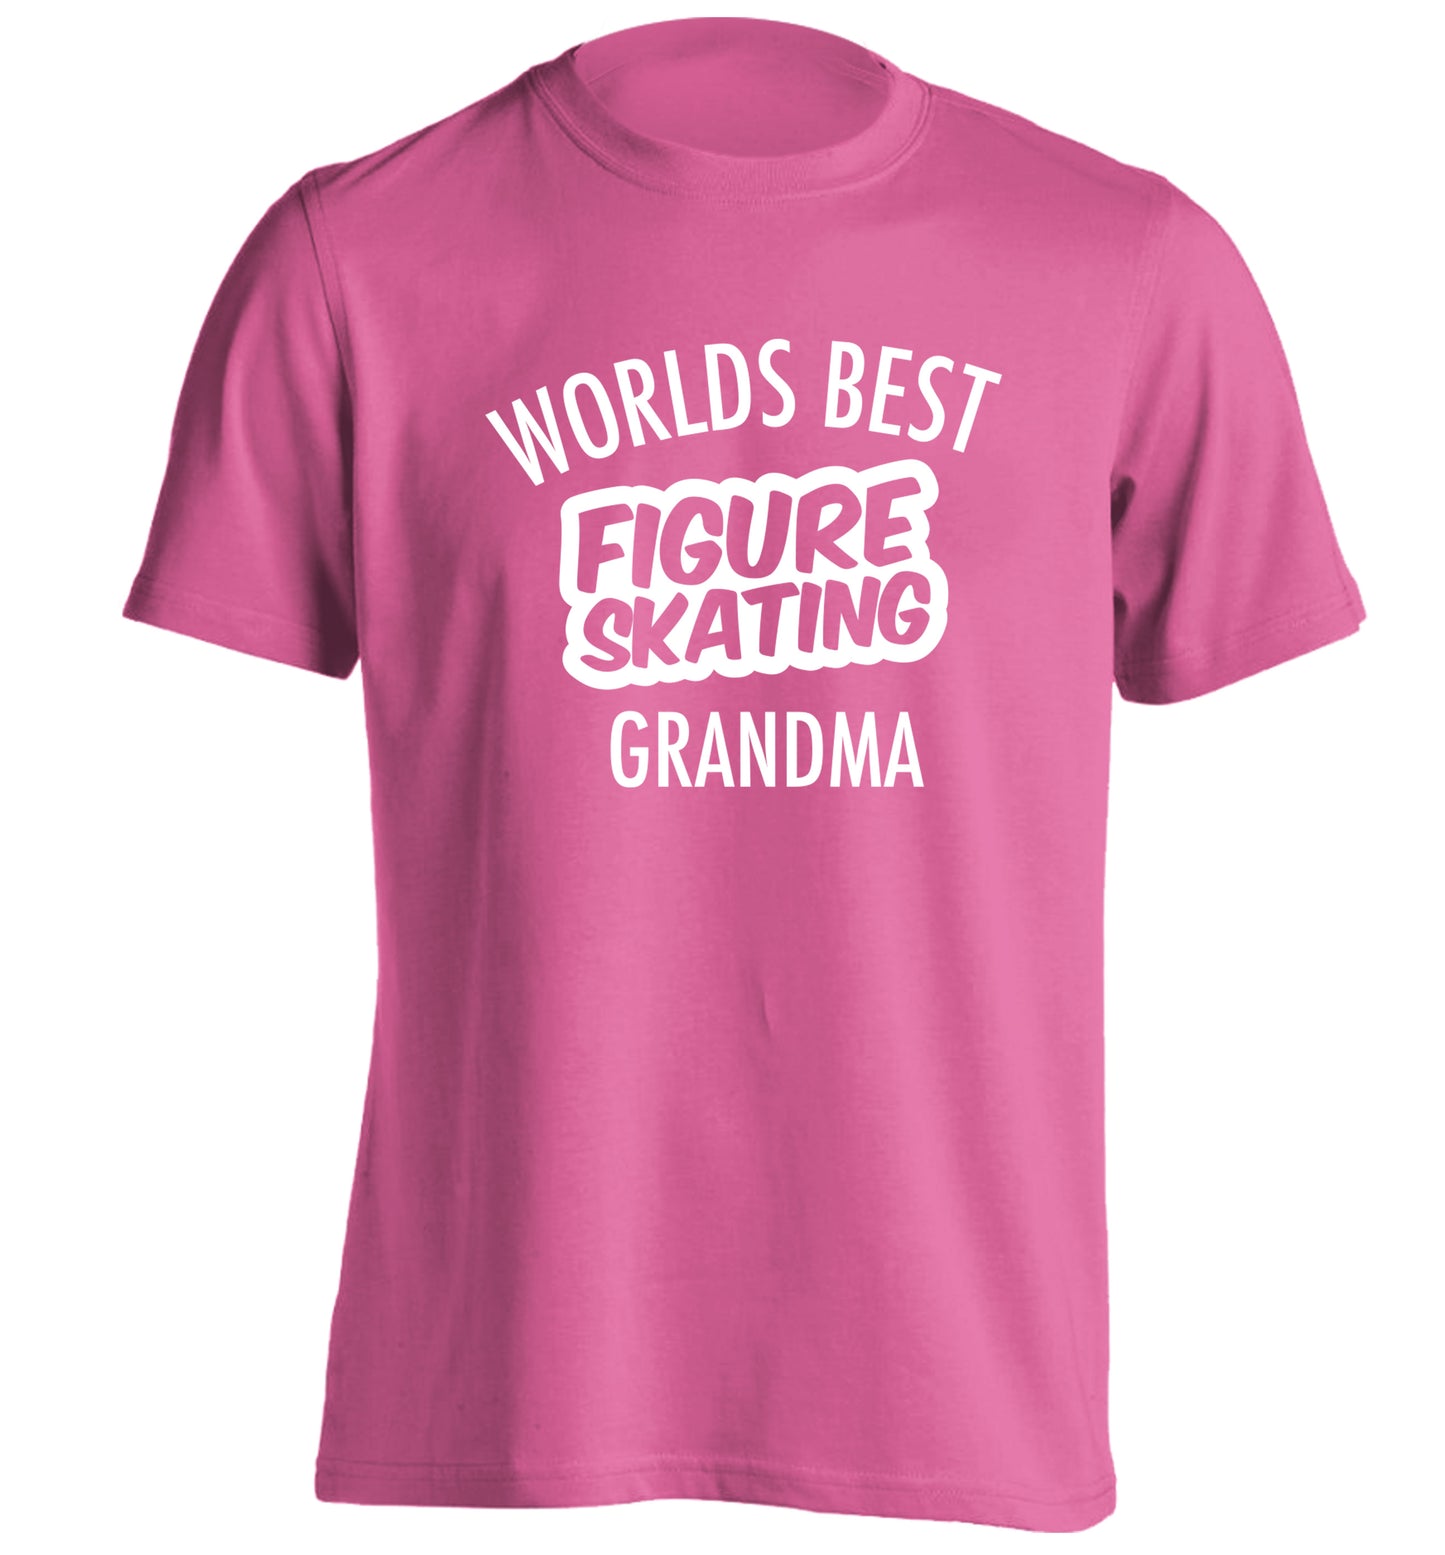 Worlds best figure skating grandma adults unisexpink Tshirt 2XL